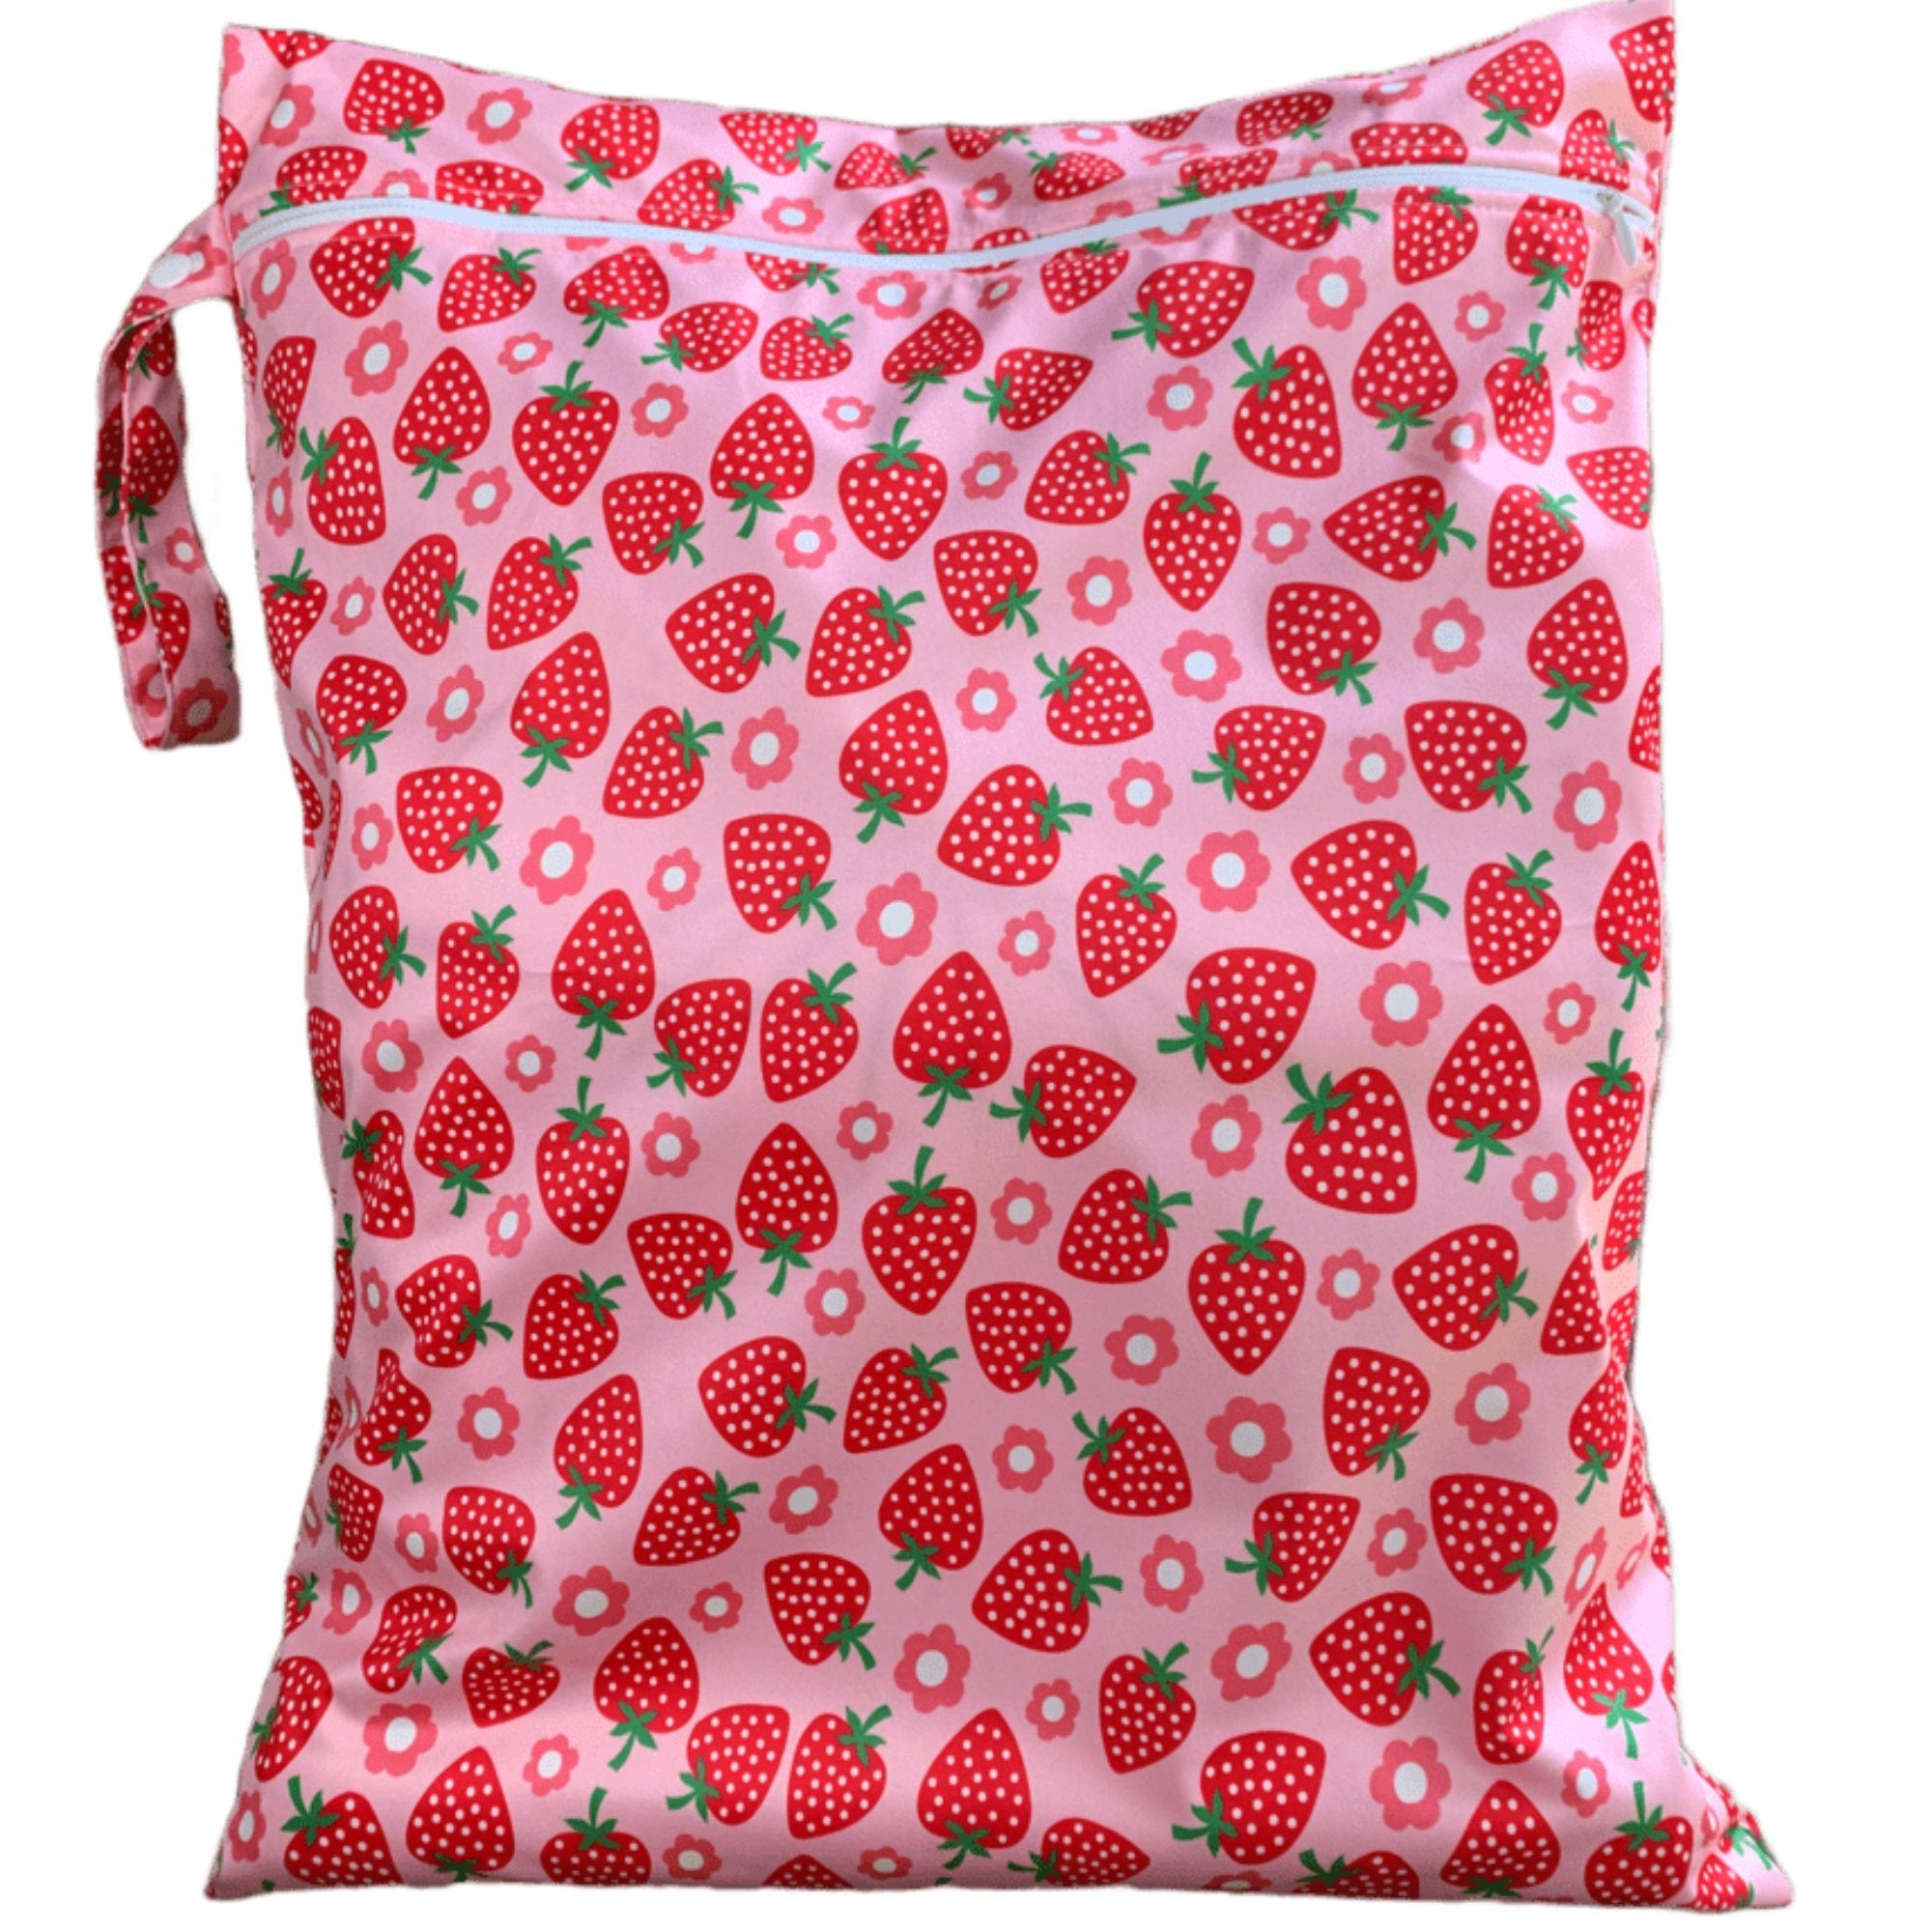 Large 40x50 cm Bag - Strawberry Large Wet Bag Lil Savvy 